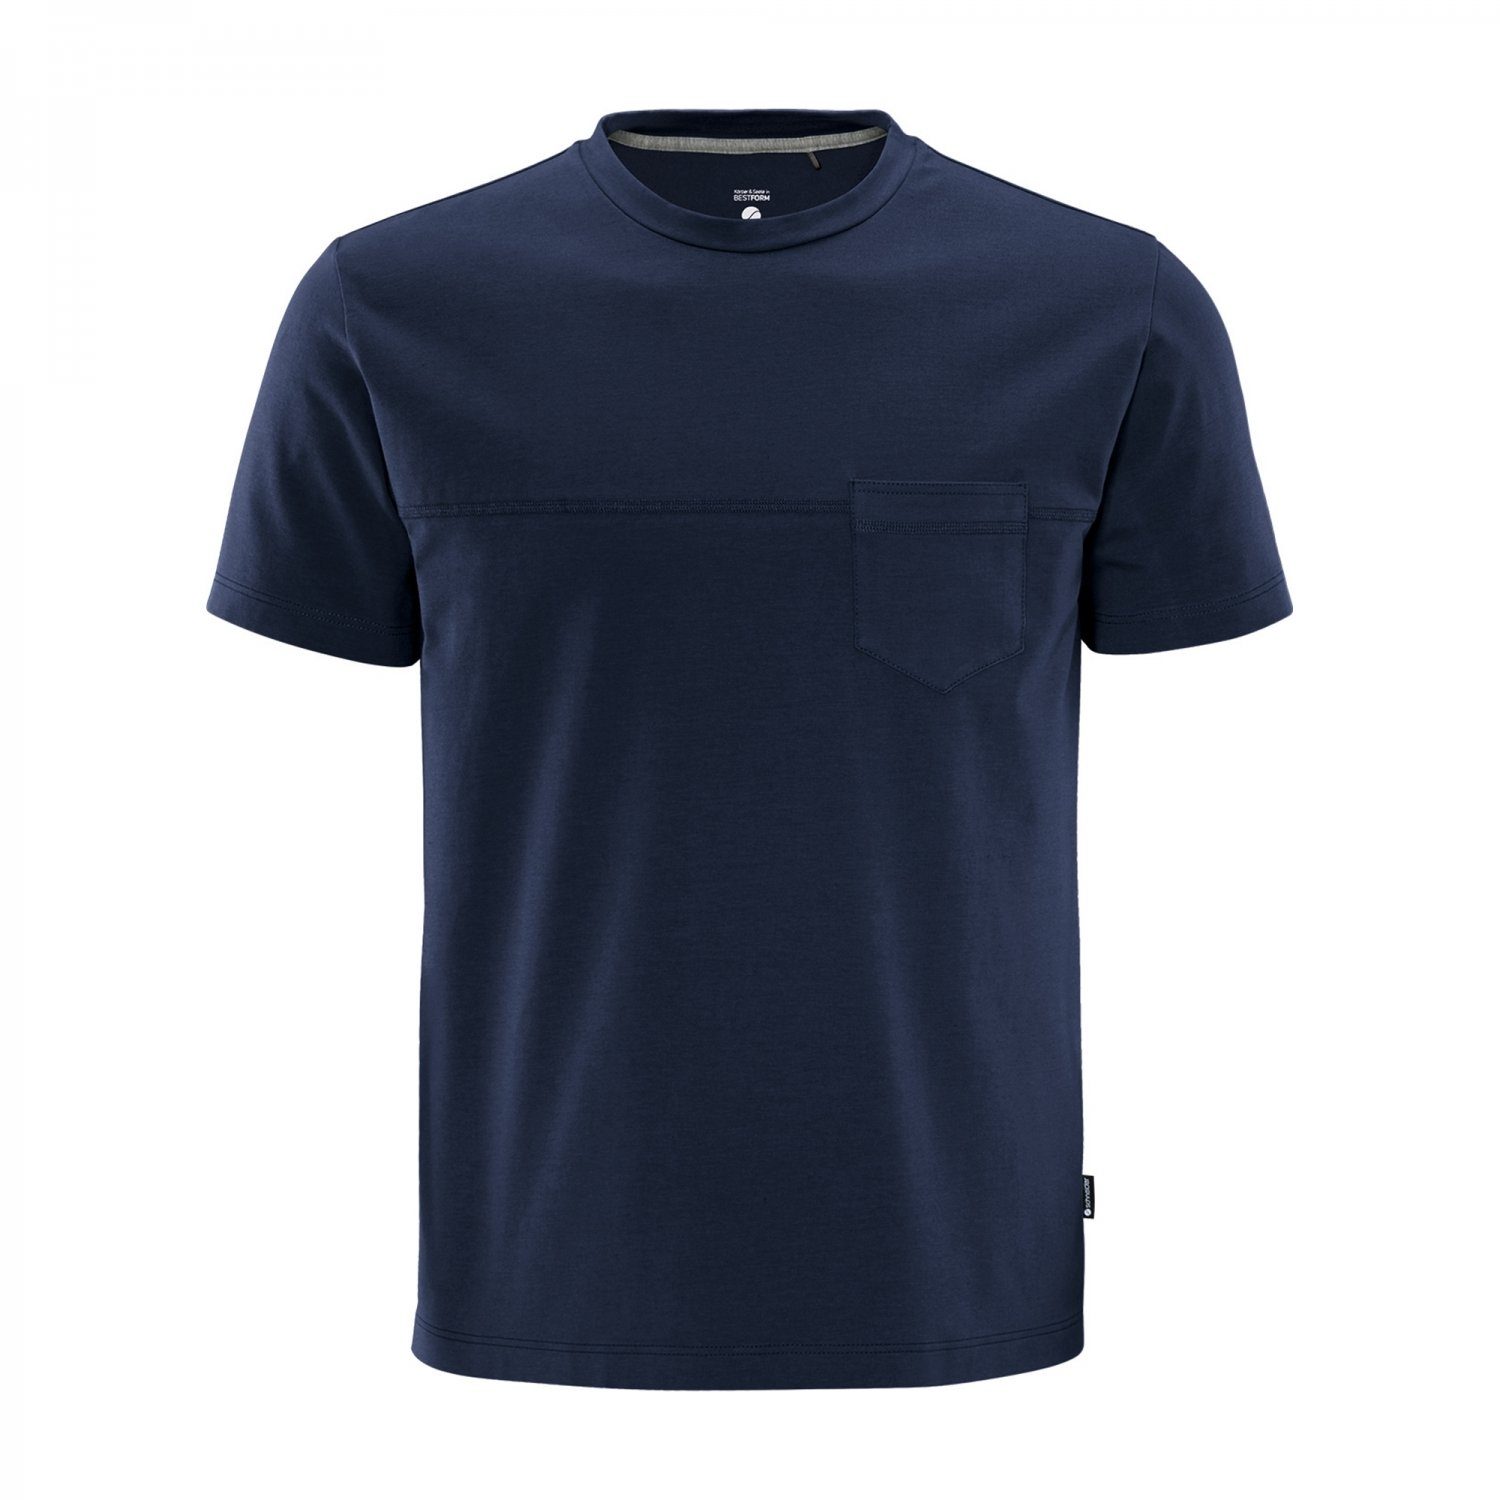 SCHNEIDER T-Shirt Herren Sportswear dunkelblau JULIENM-Shirt